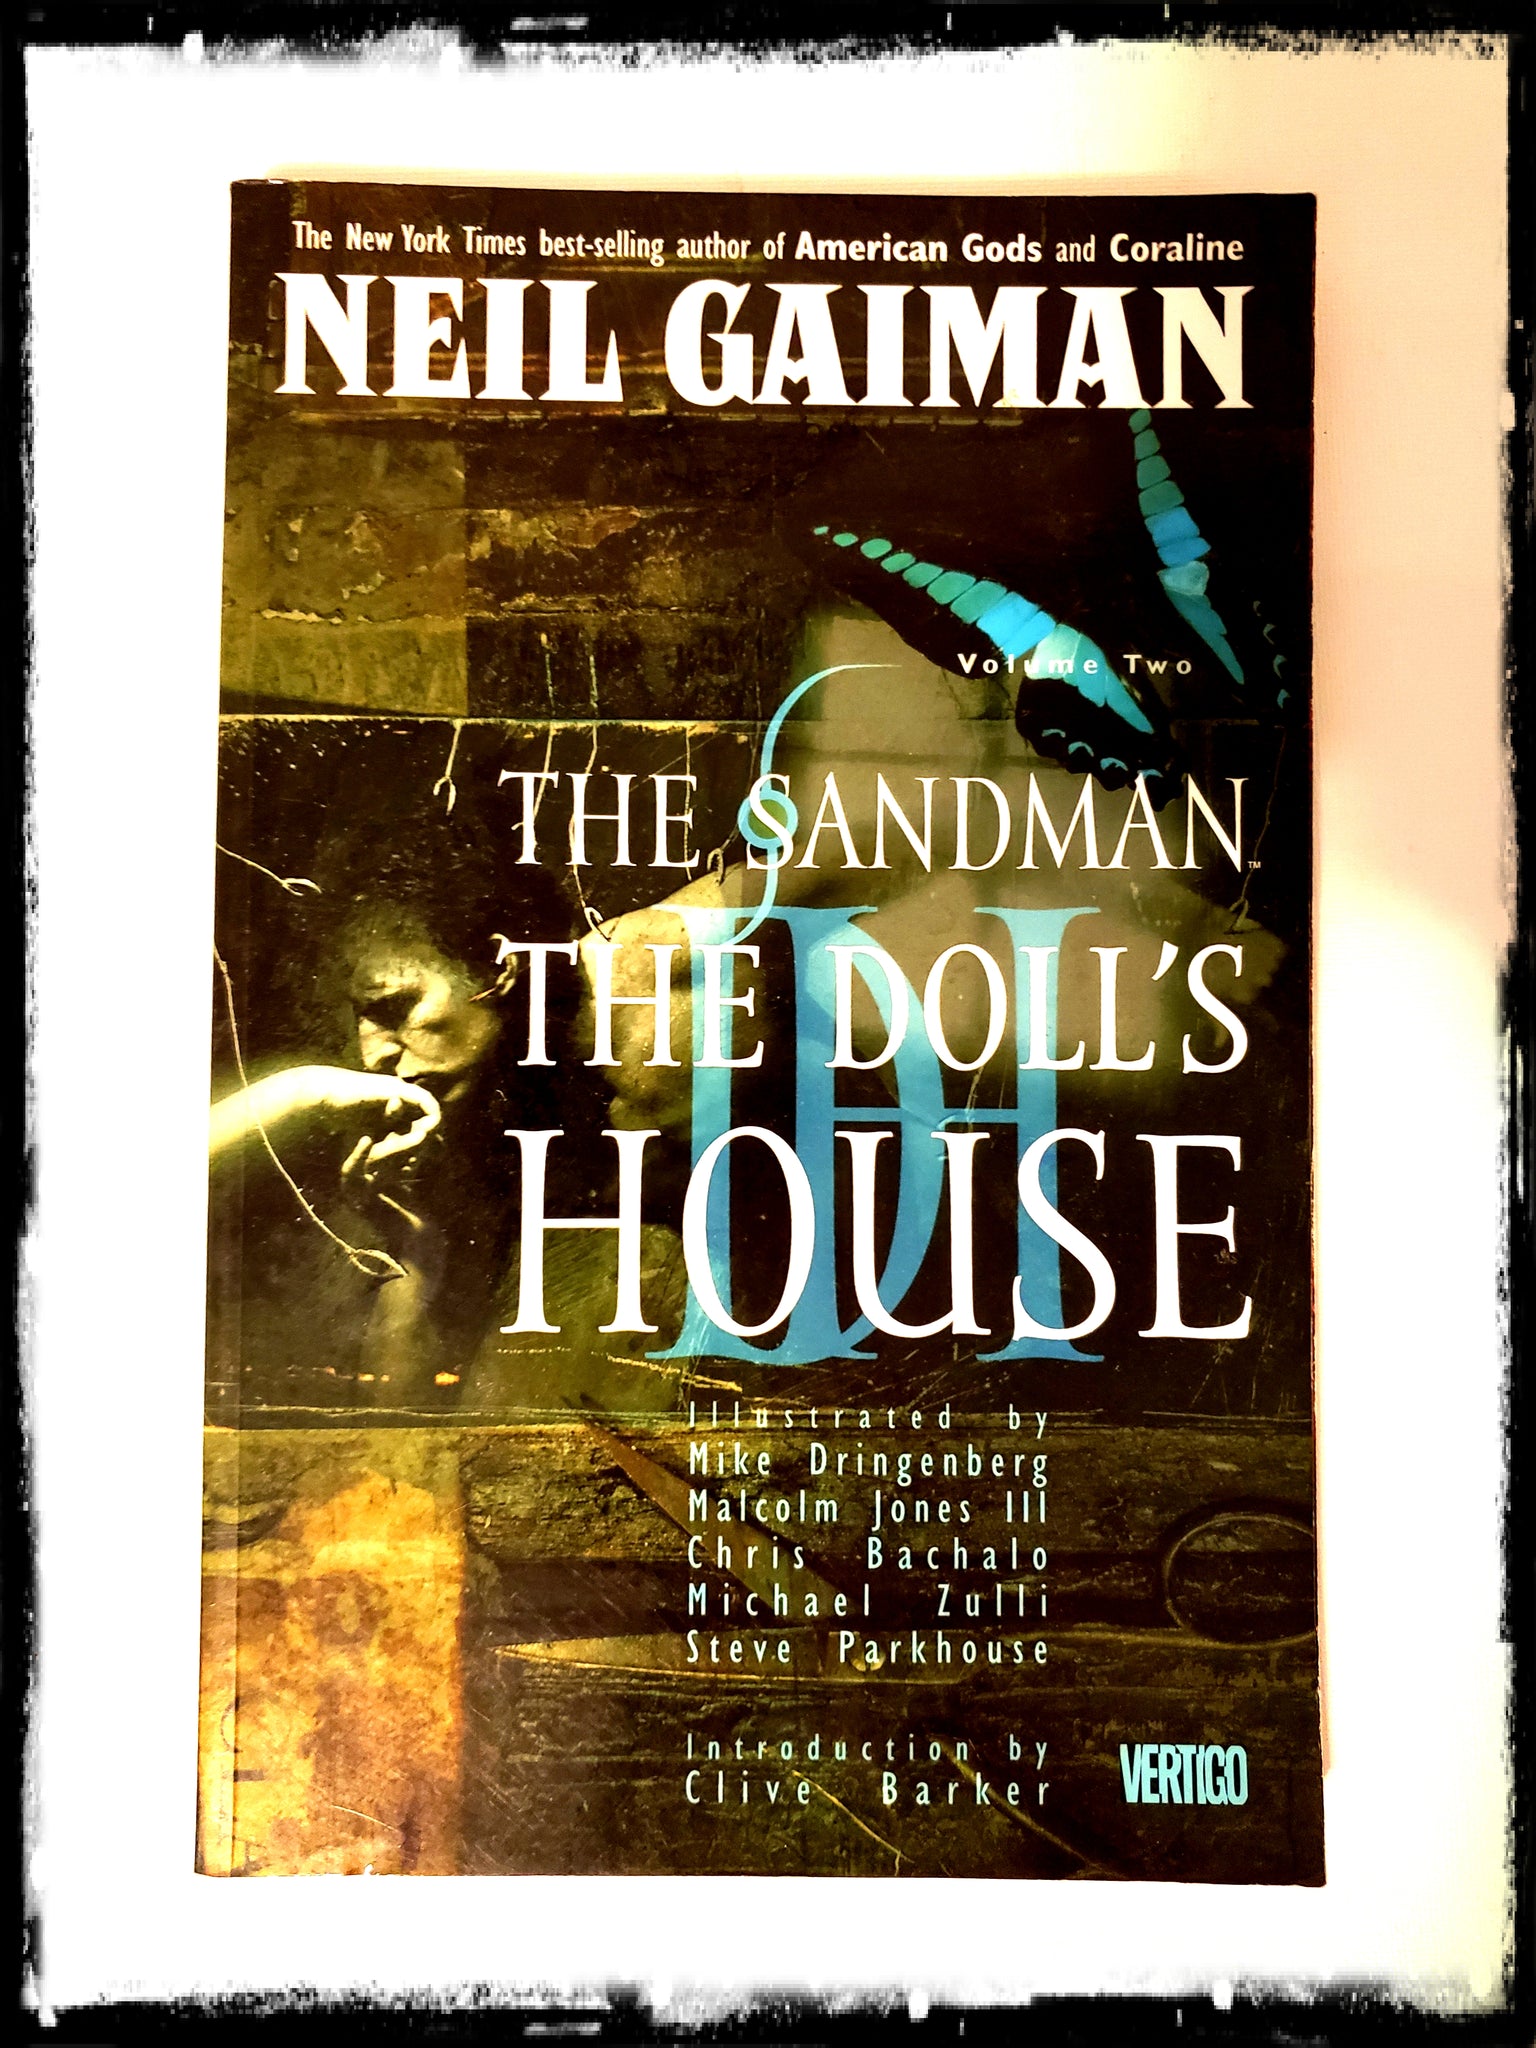 SANDMAN - VOL. 2 - THE DOLL'S HOUSE - 1991 TPB EDITION